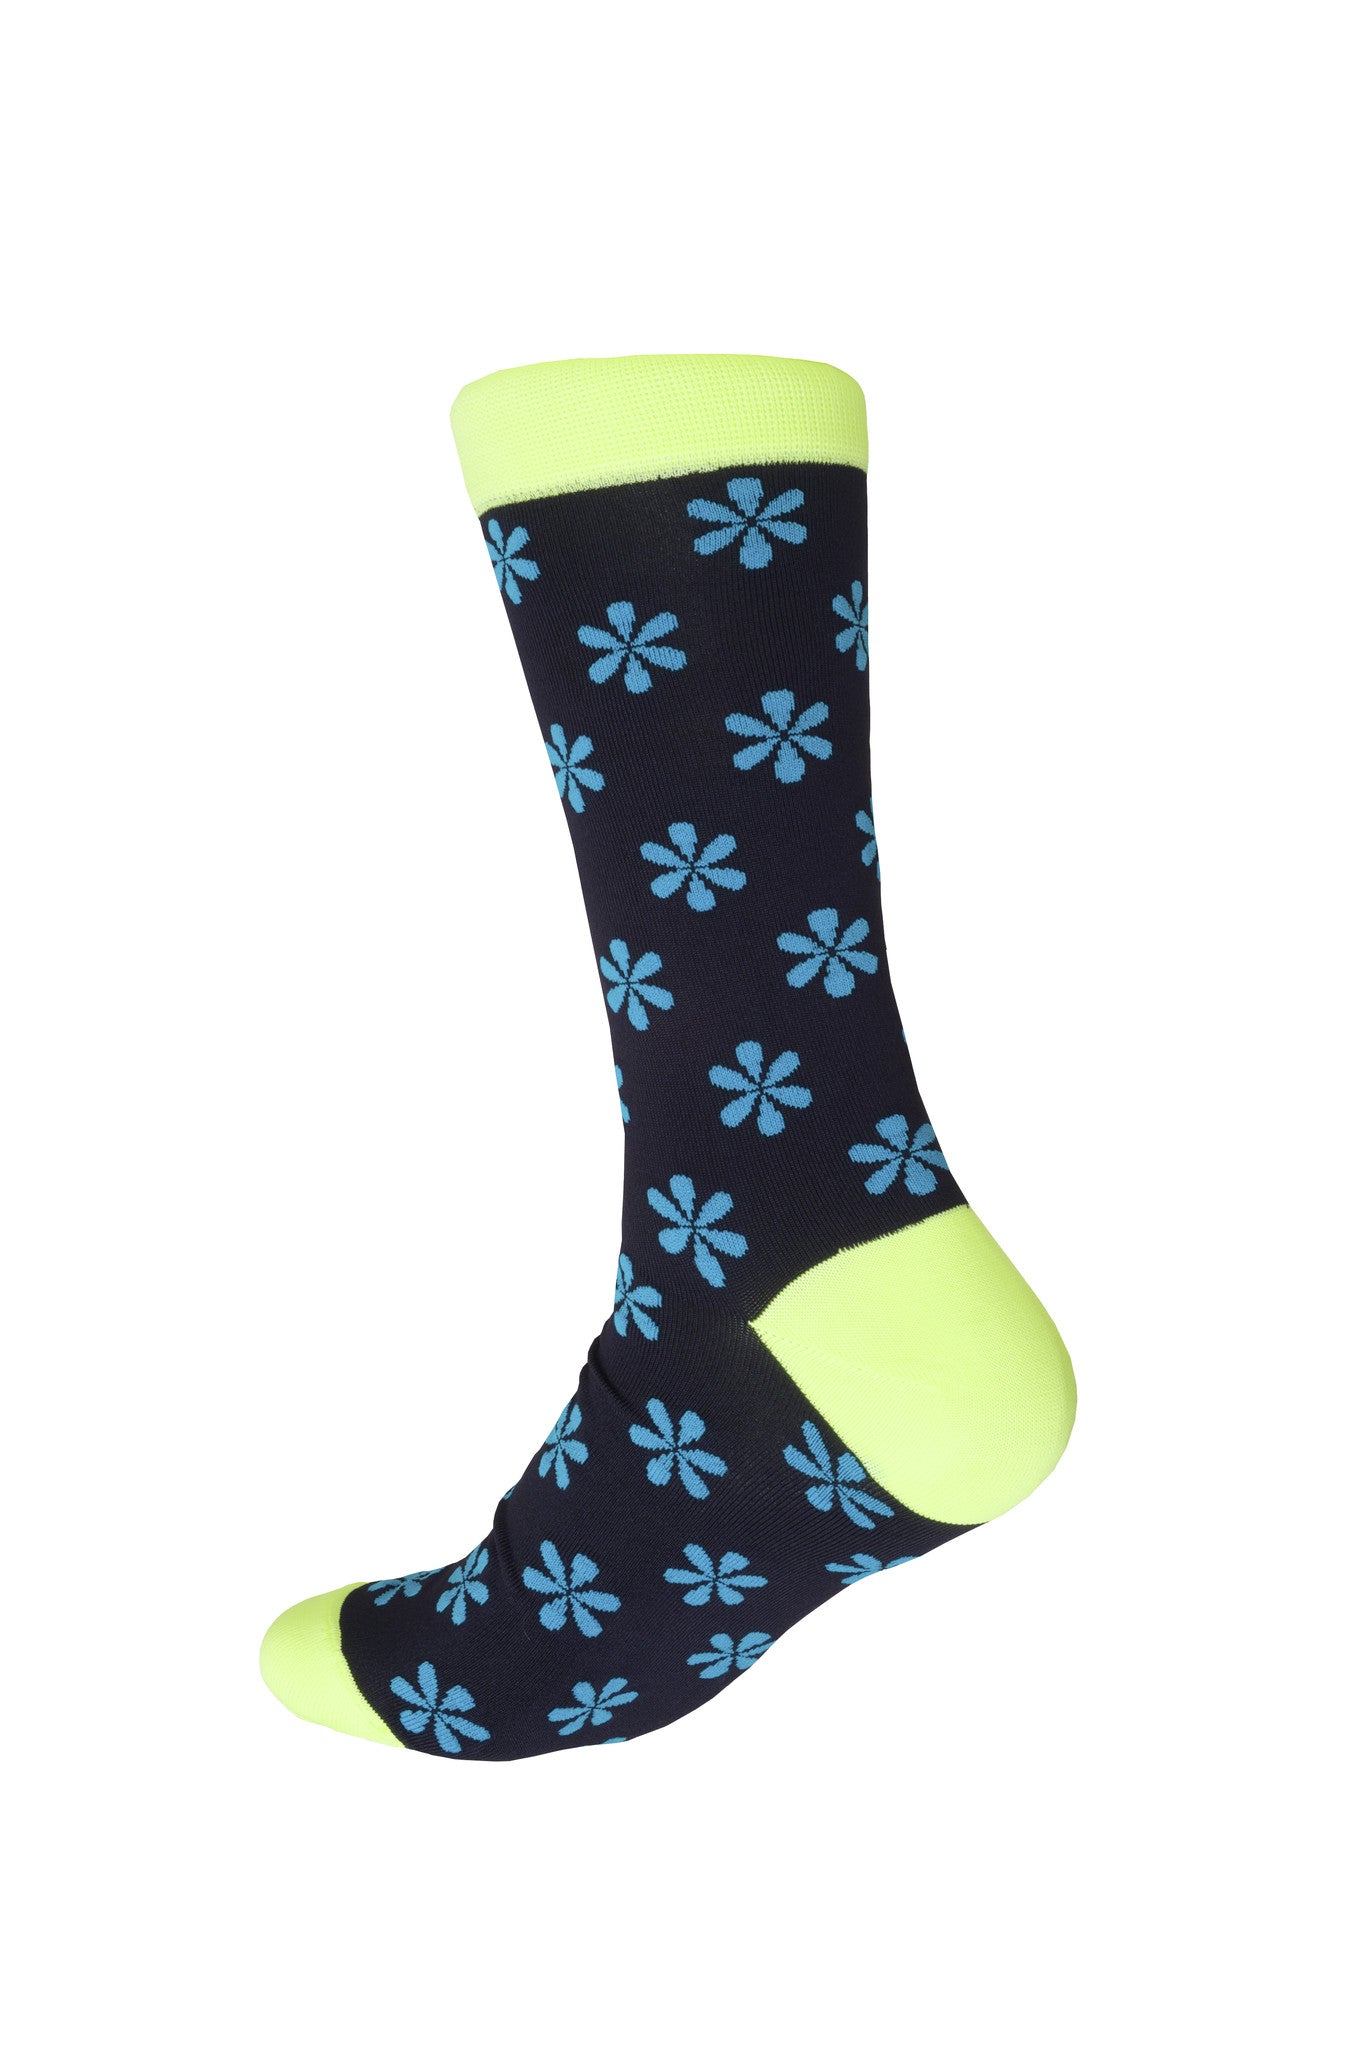 Giraffecool-Giraffe-Cool-DarkBlue-Yellow-Blue-Flowers-Microfiber-Fashion-Socks-Back